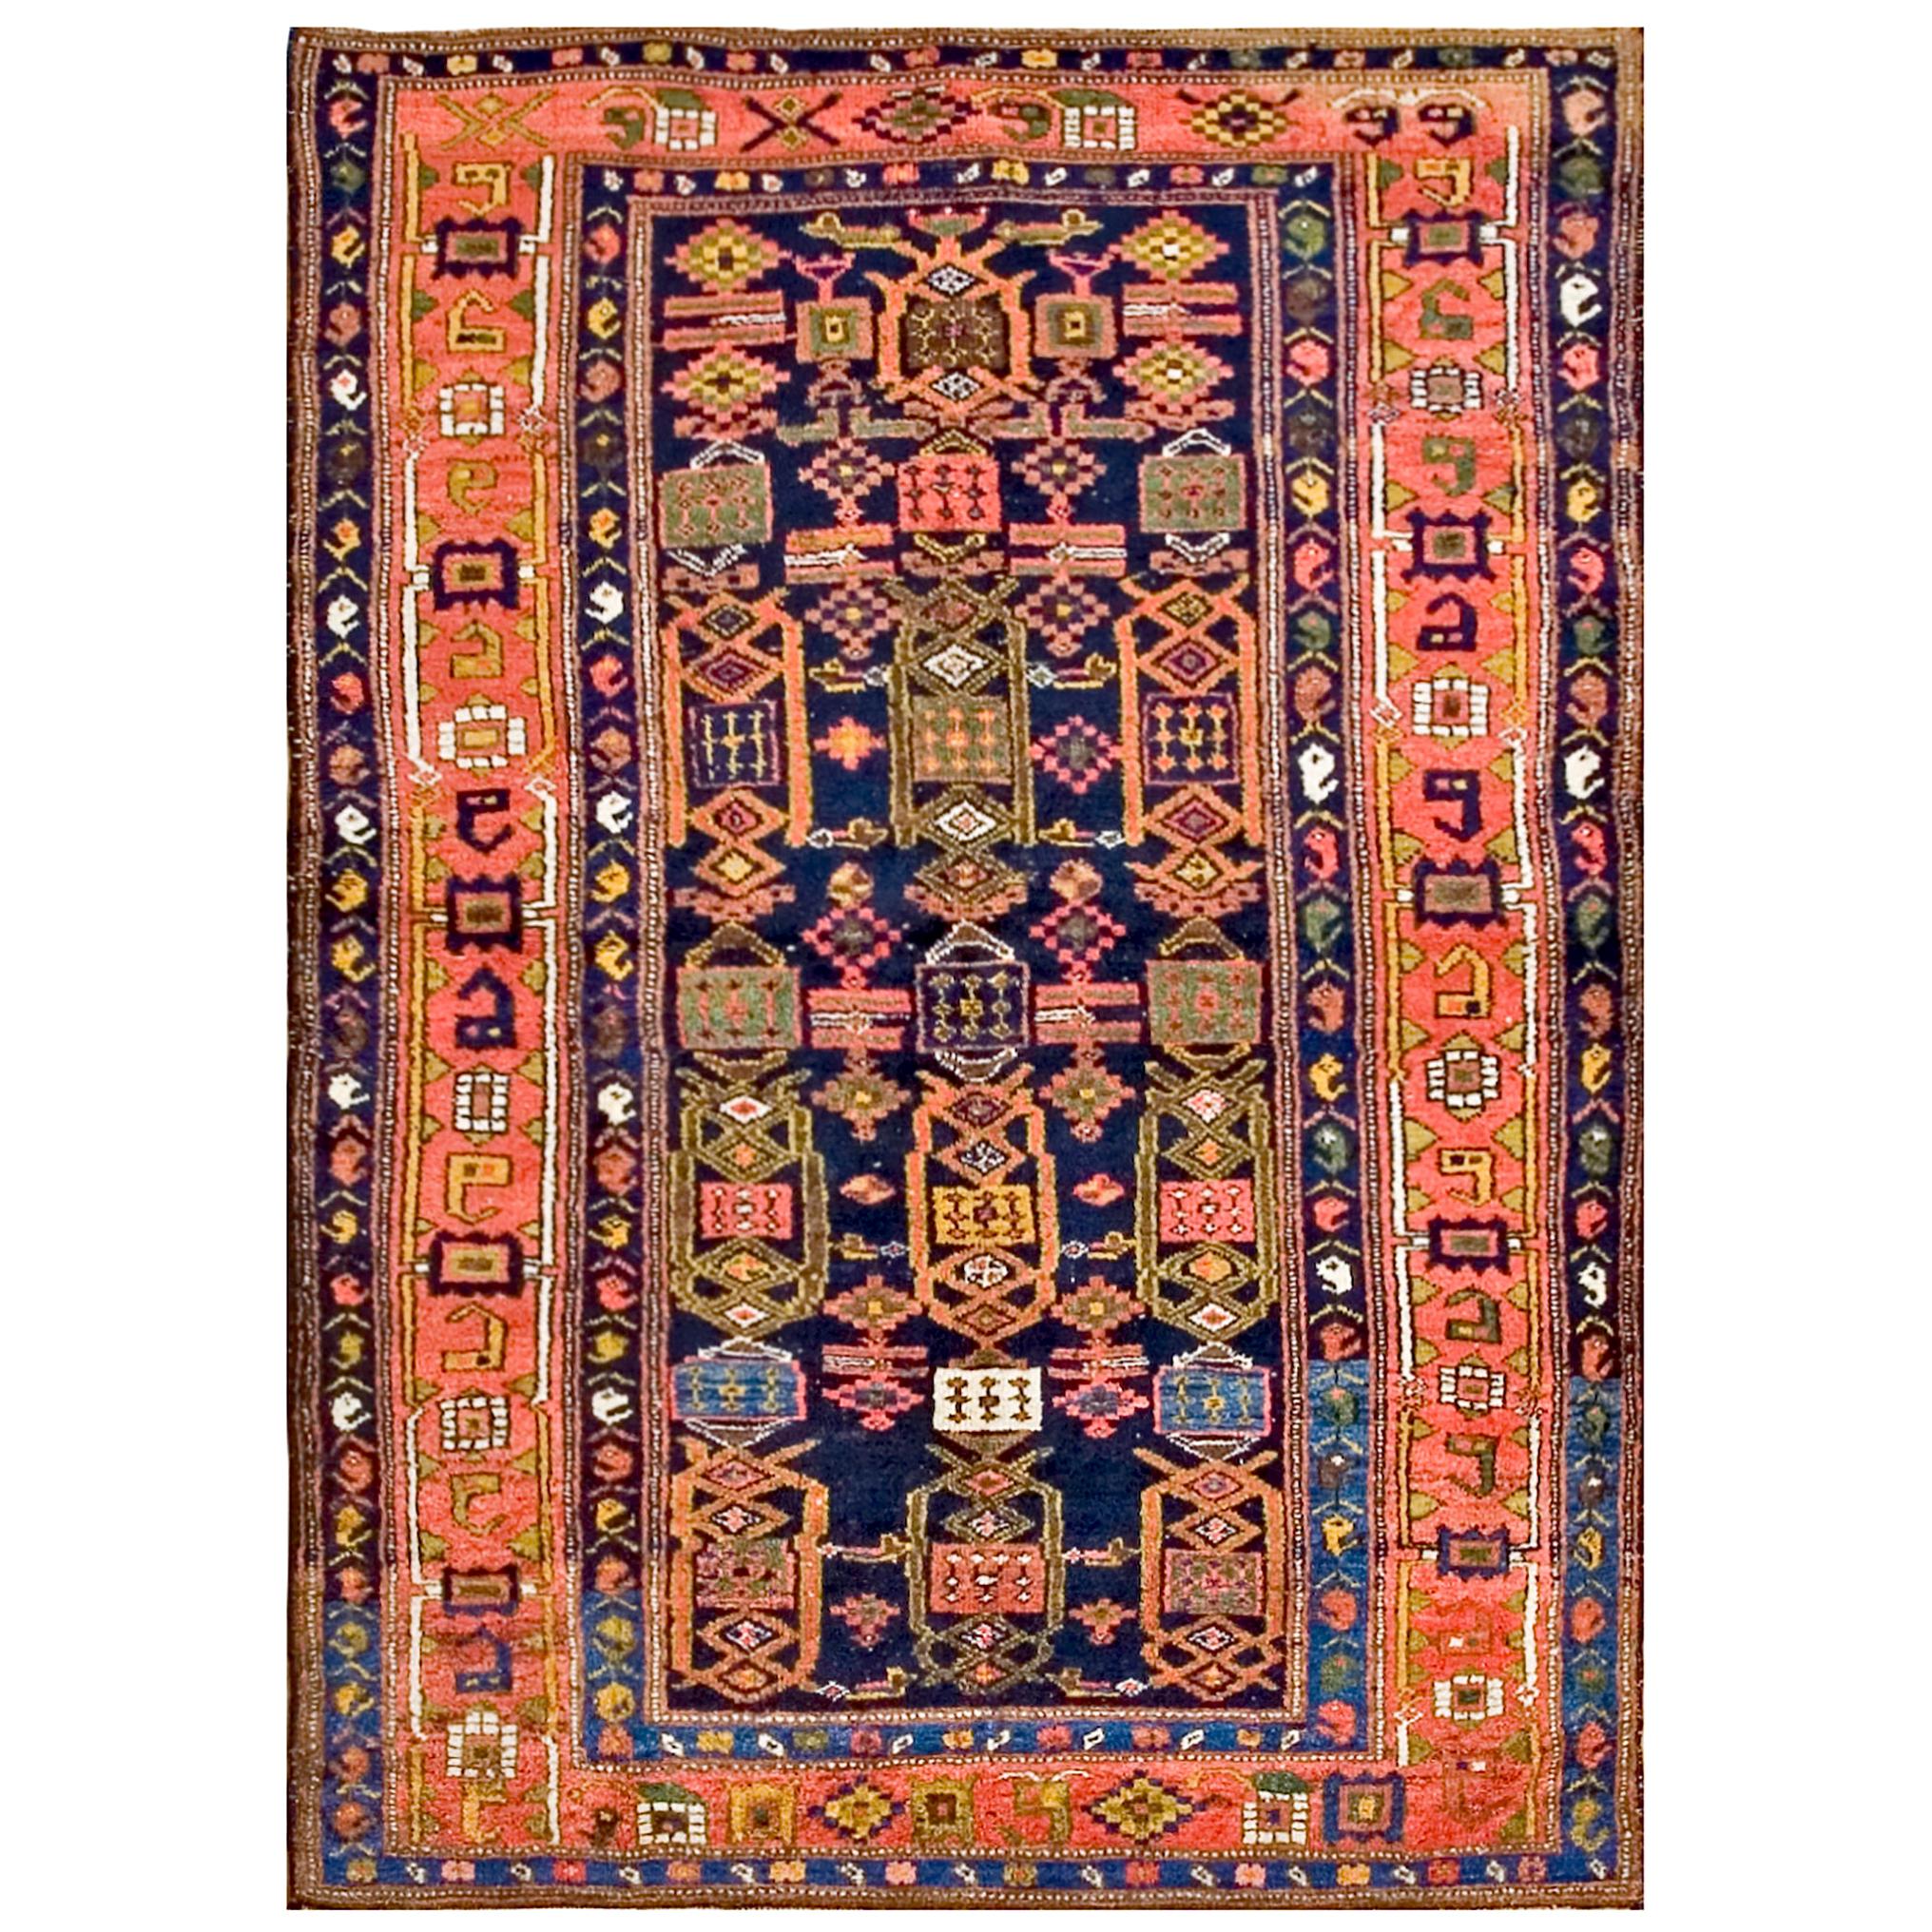 Early 20th Century W. Persian Kurdish Carpet ( 4'9" x 6'10" - 145 x 208 ) For Sale